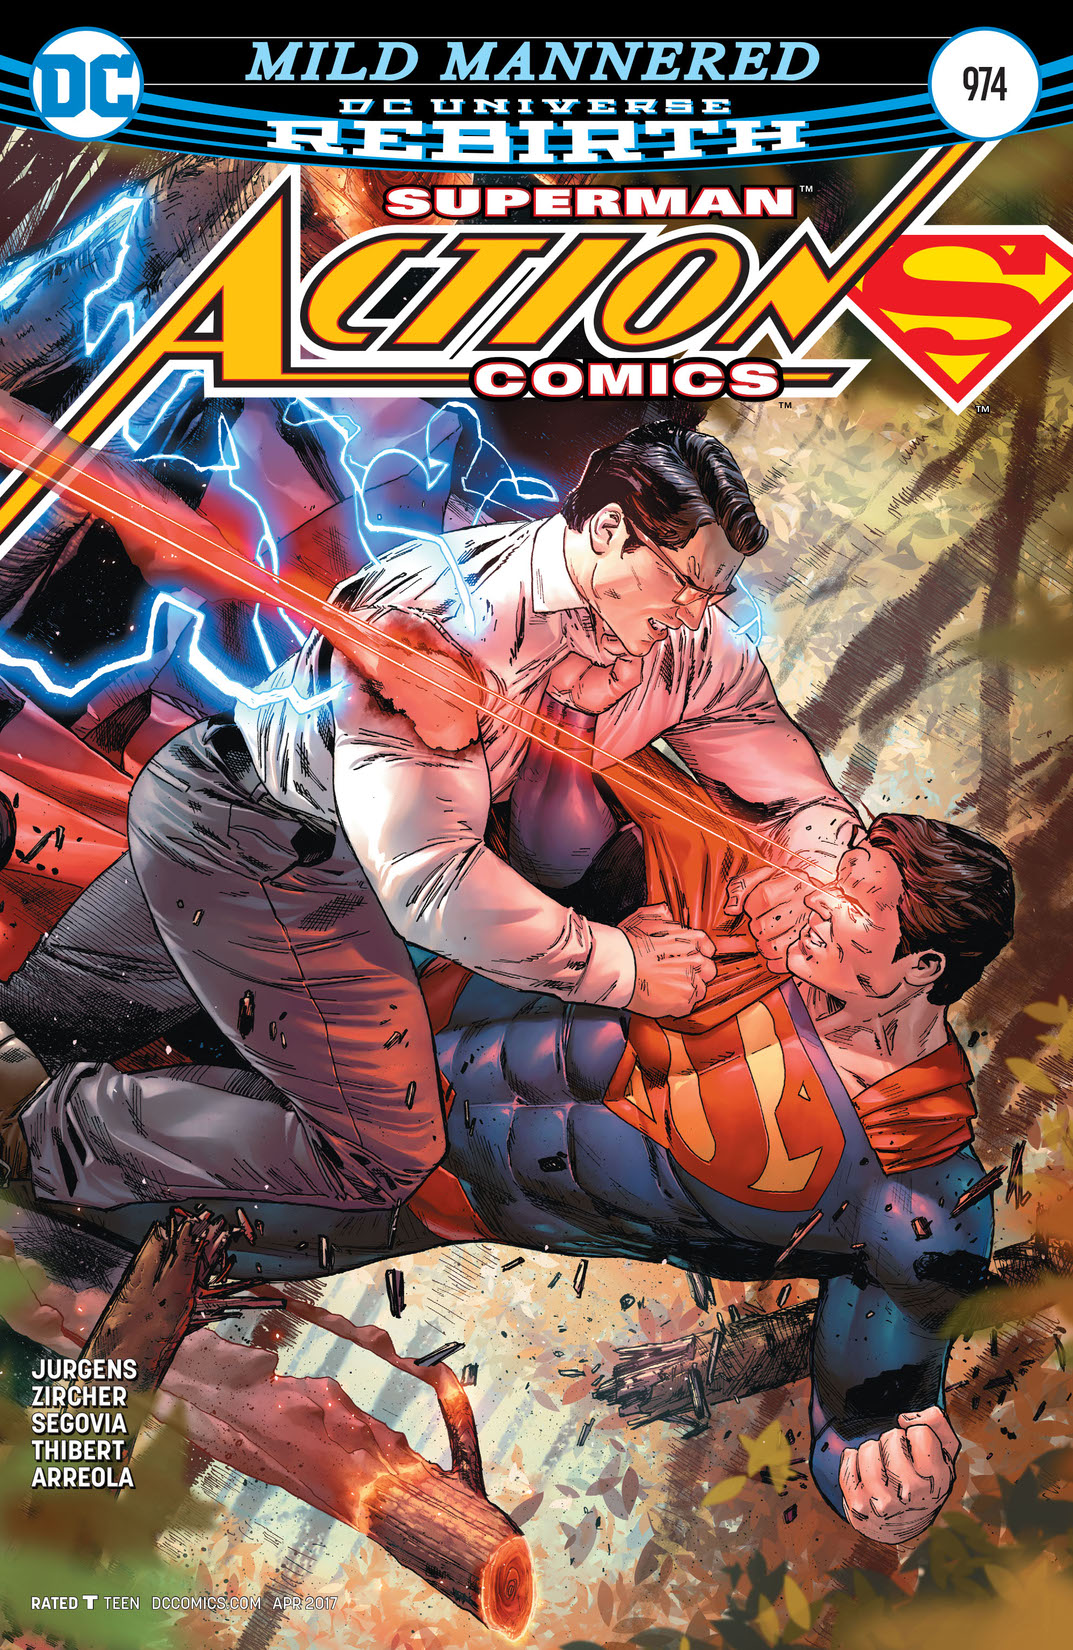 Action Comics (2016-) #974 preview images